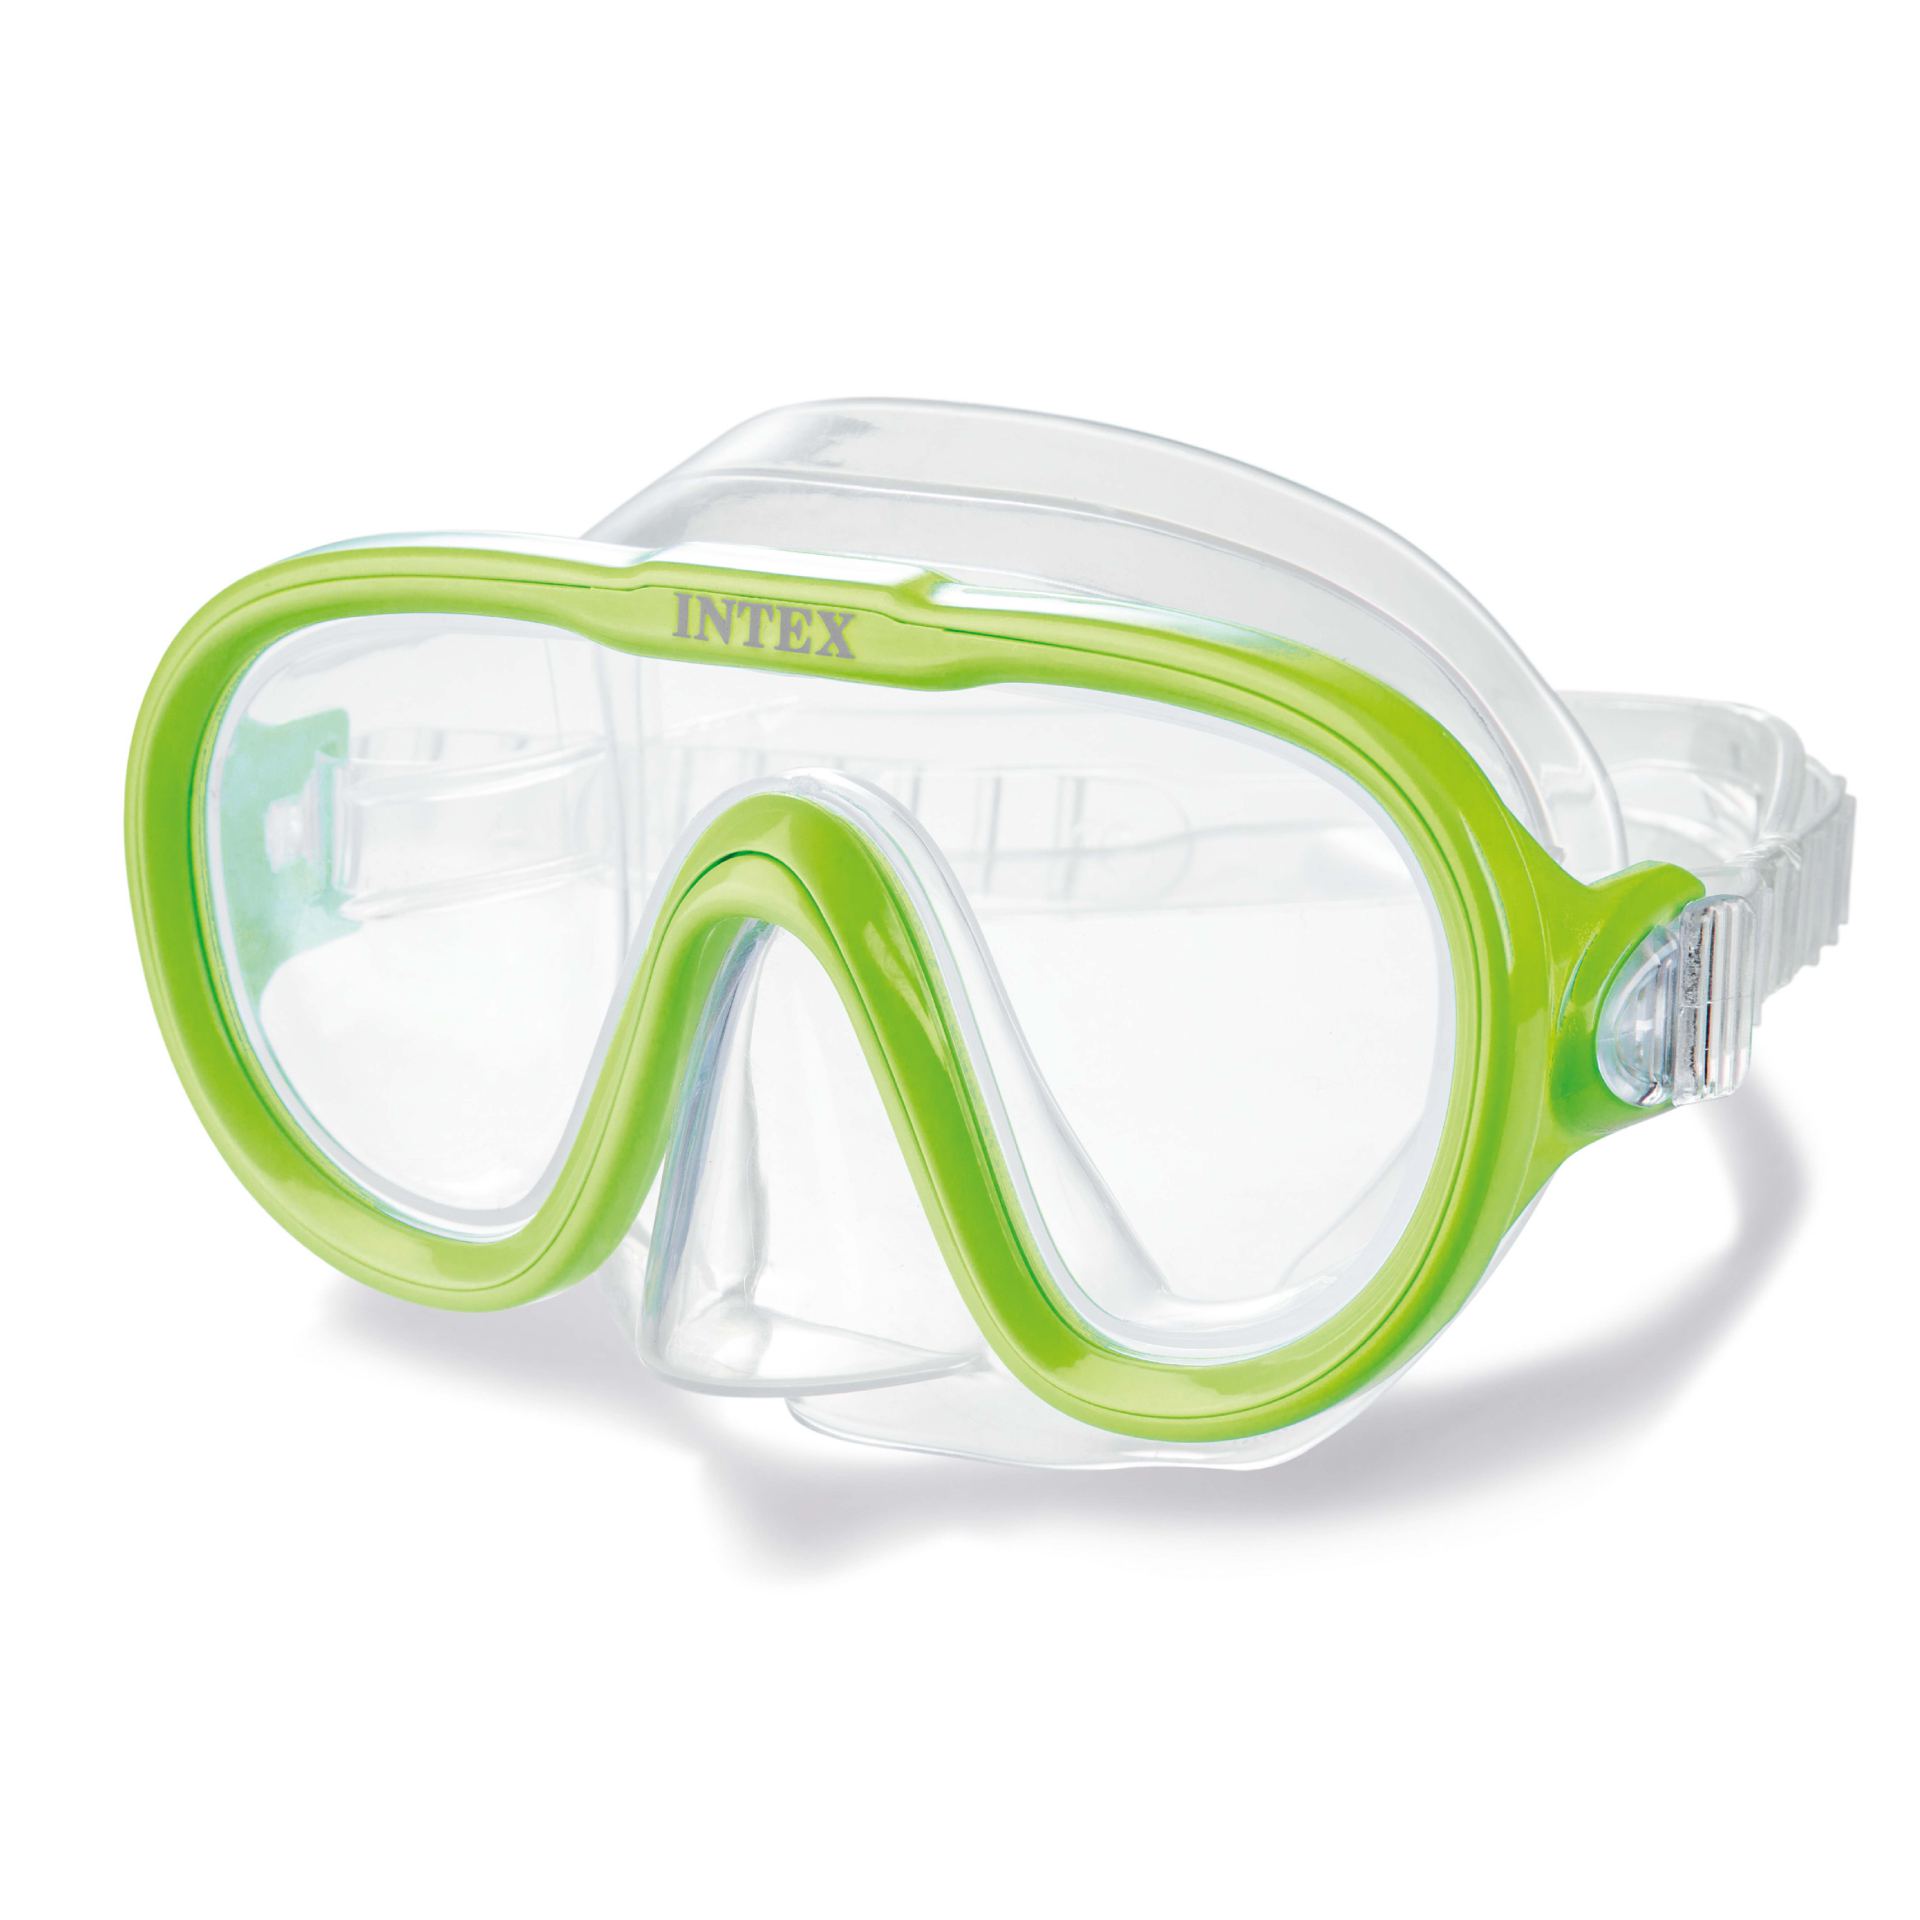 Intex sea scan swim masks - Groen